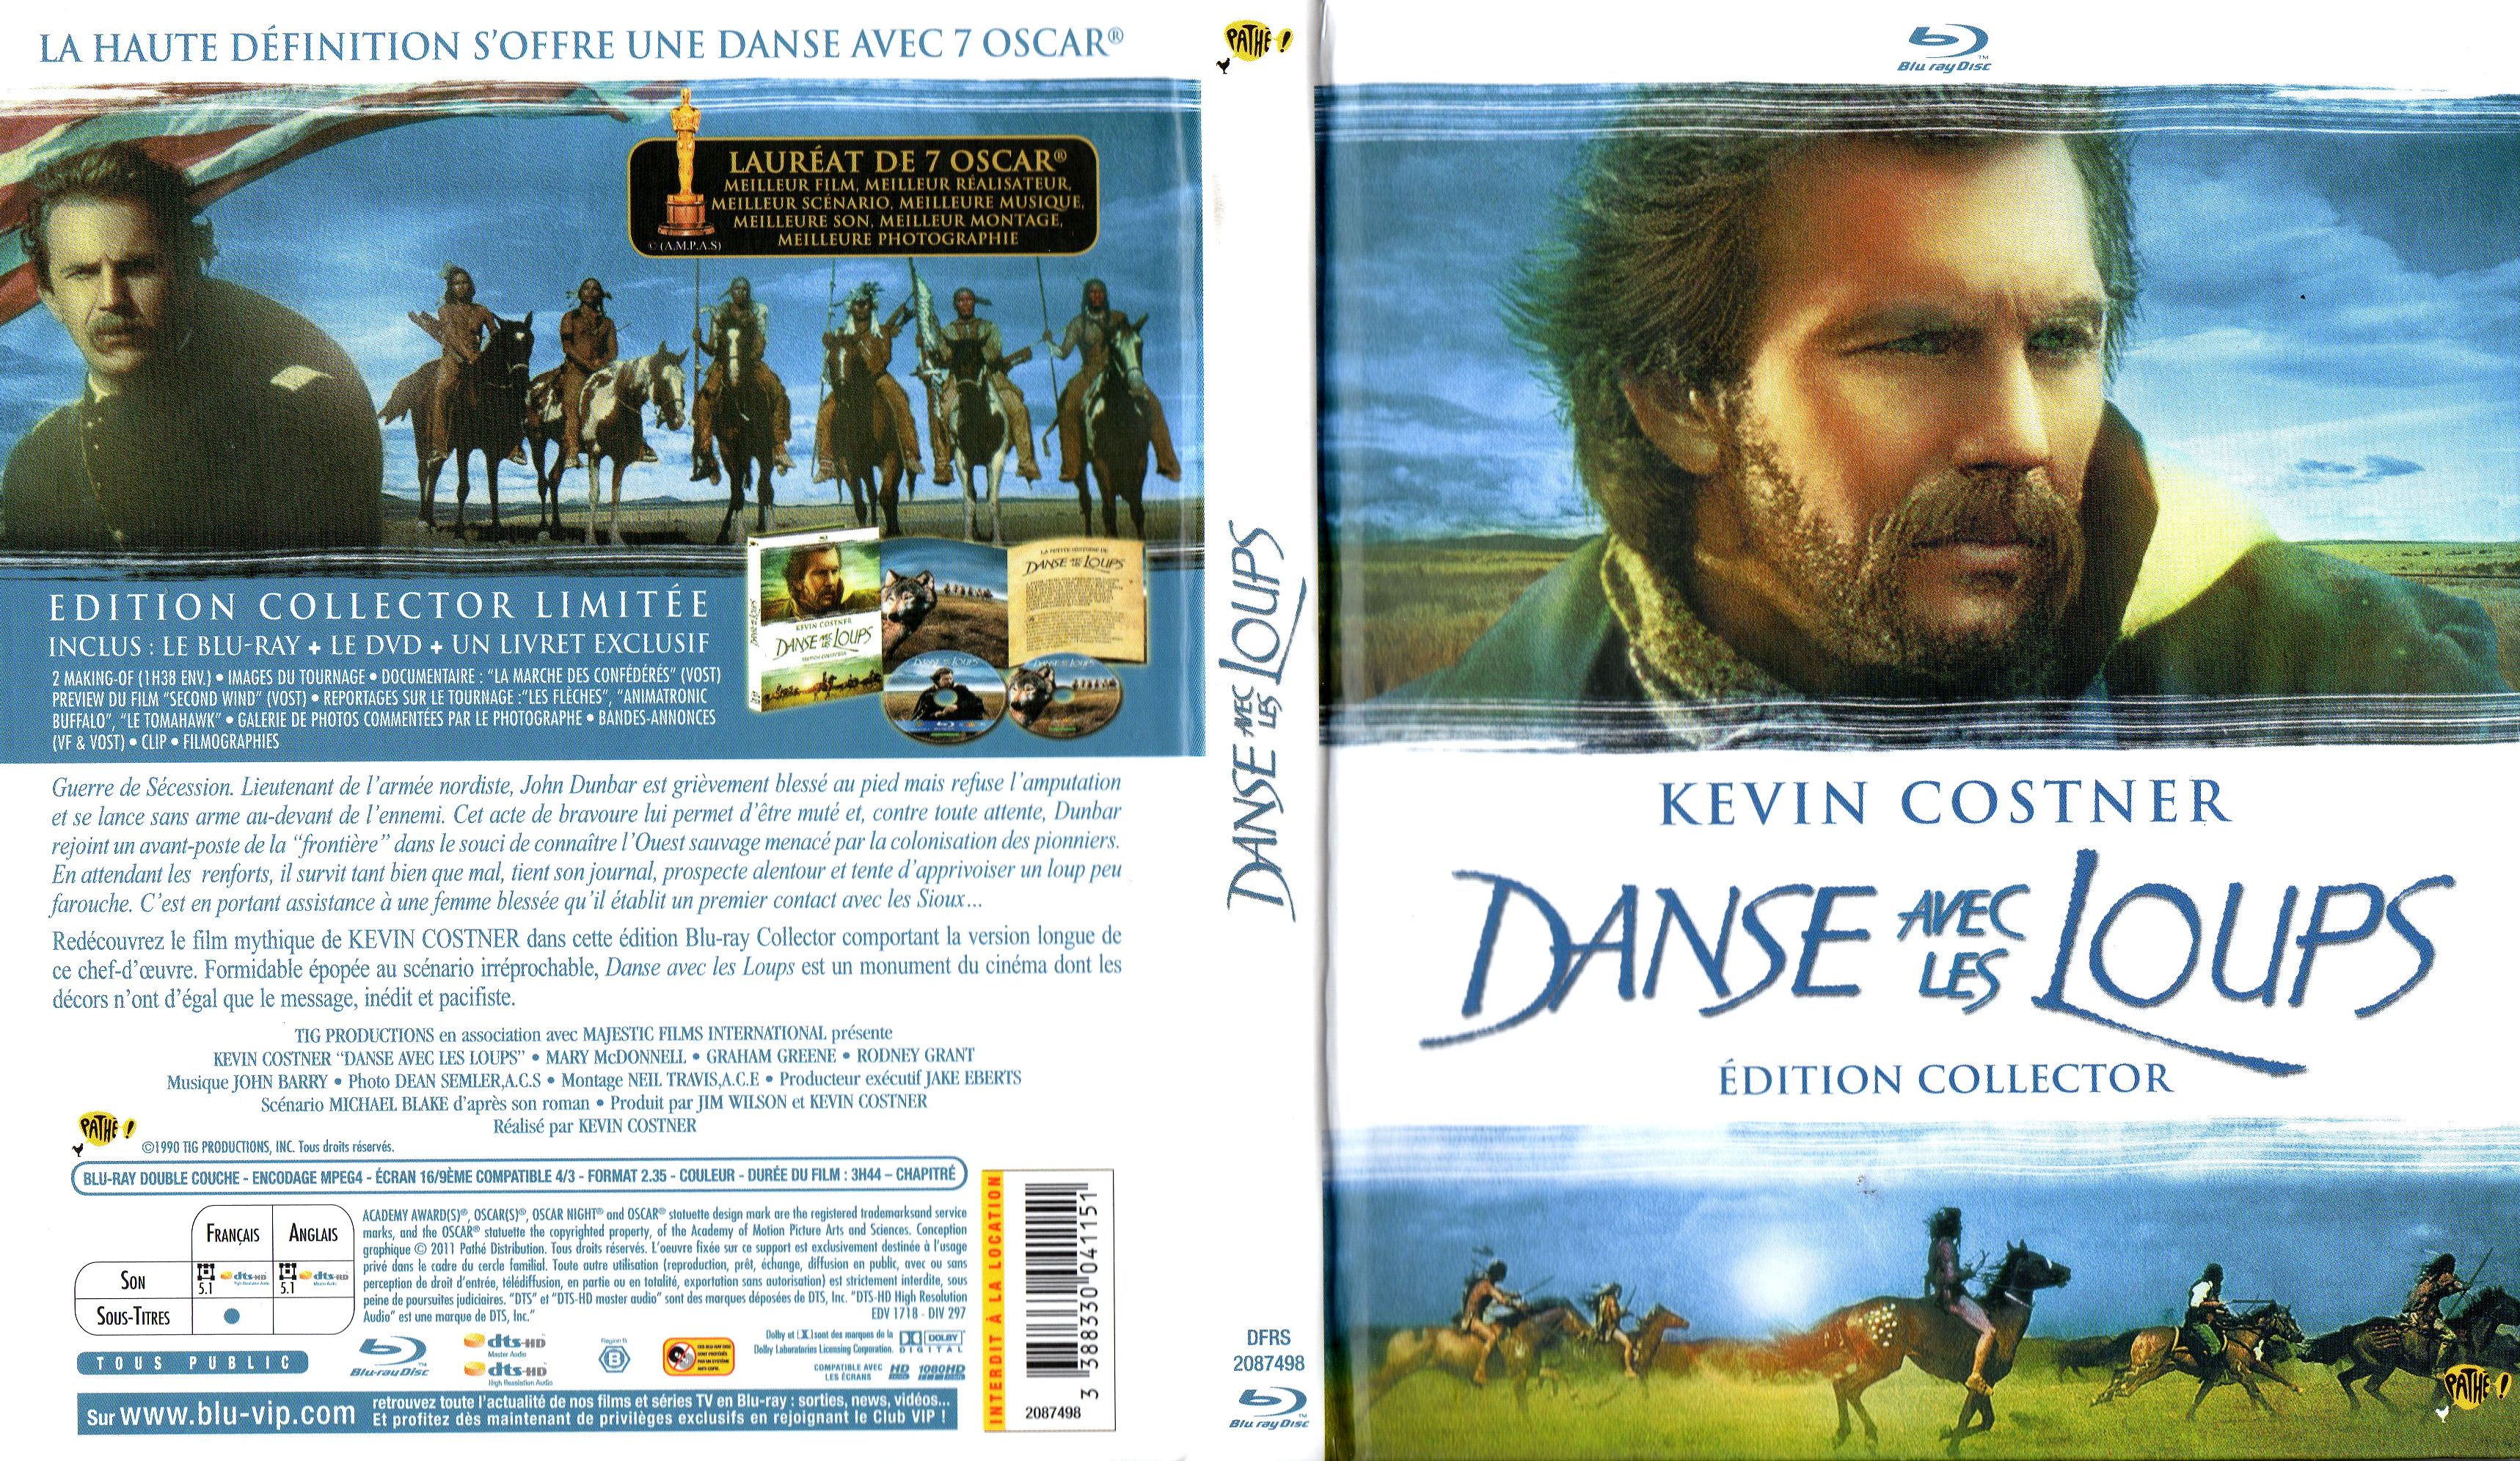 Jaquette DVD Danse avec les loups (BLU-RAY) v2